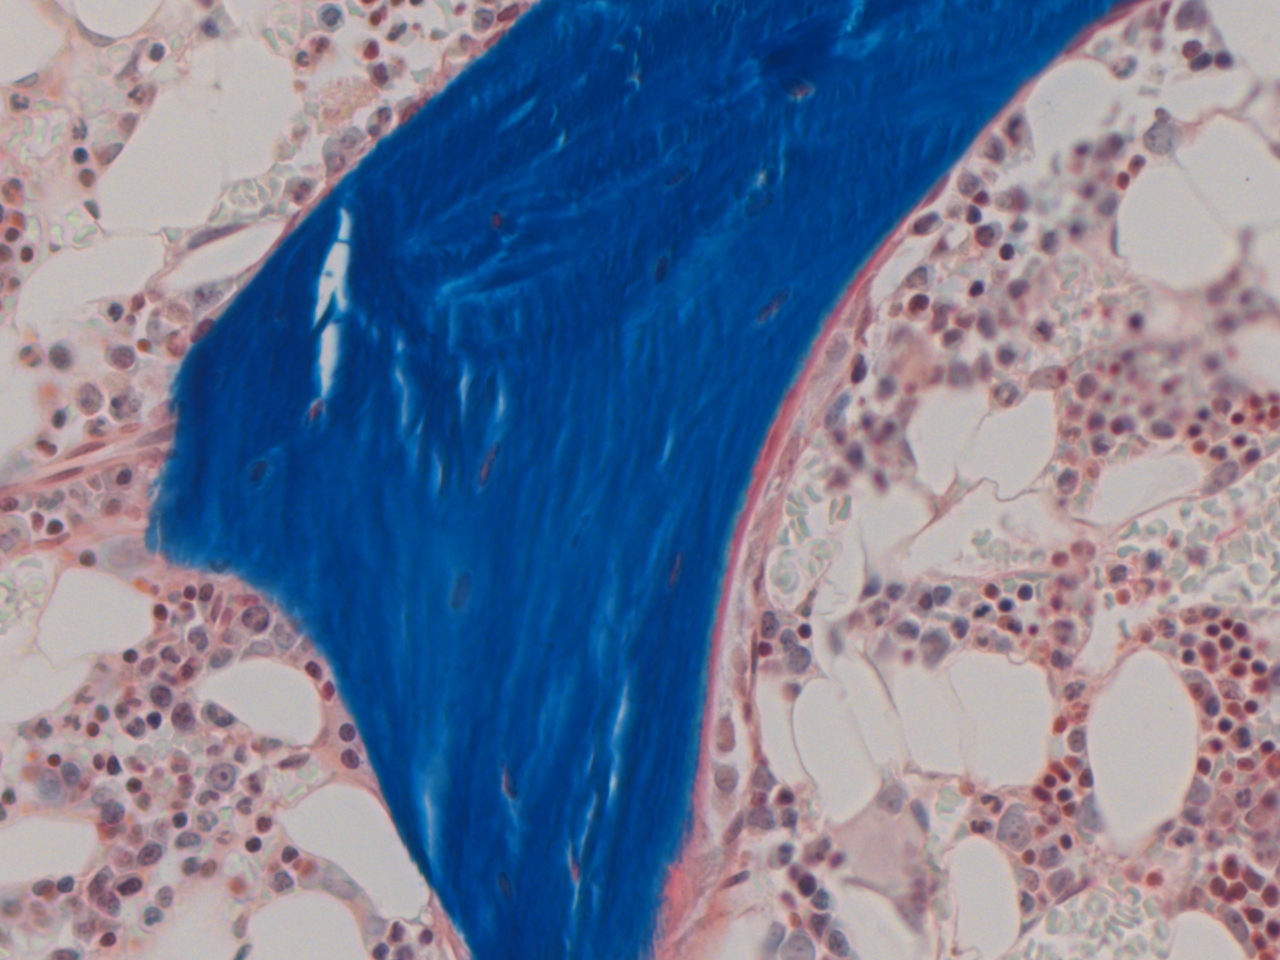 Osteoblasts and Adipocytes